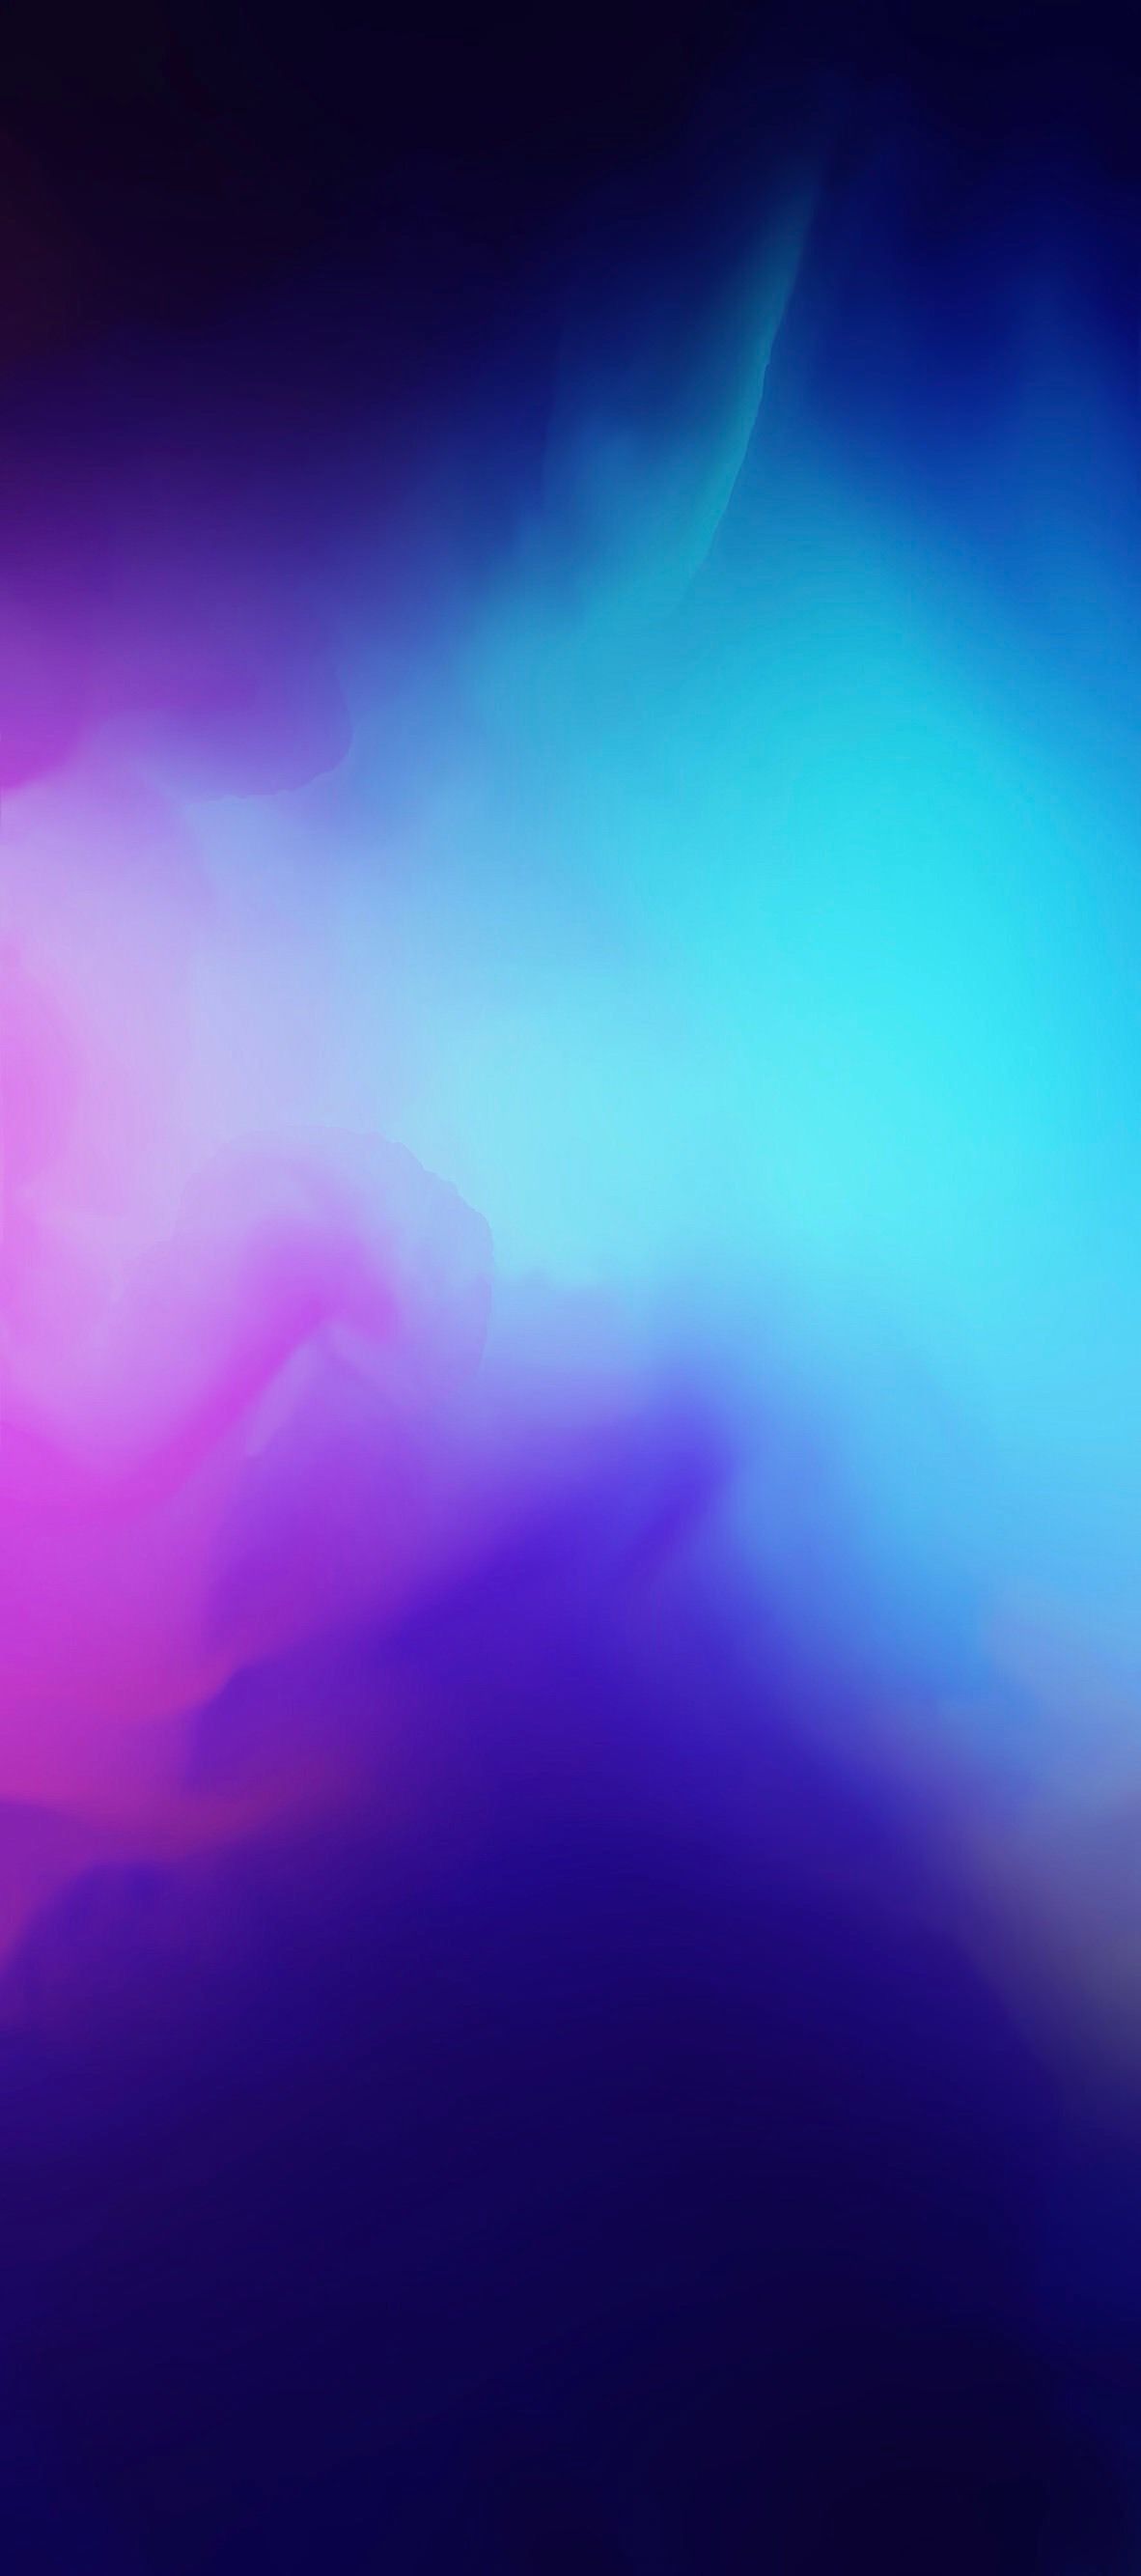 1182x Ios iPhone X, Blue, Purple, Abstract